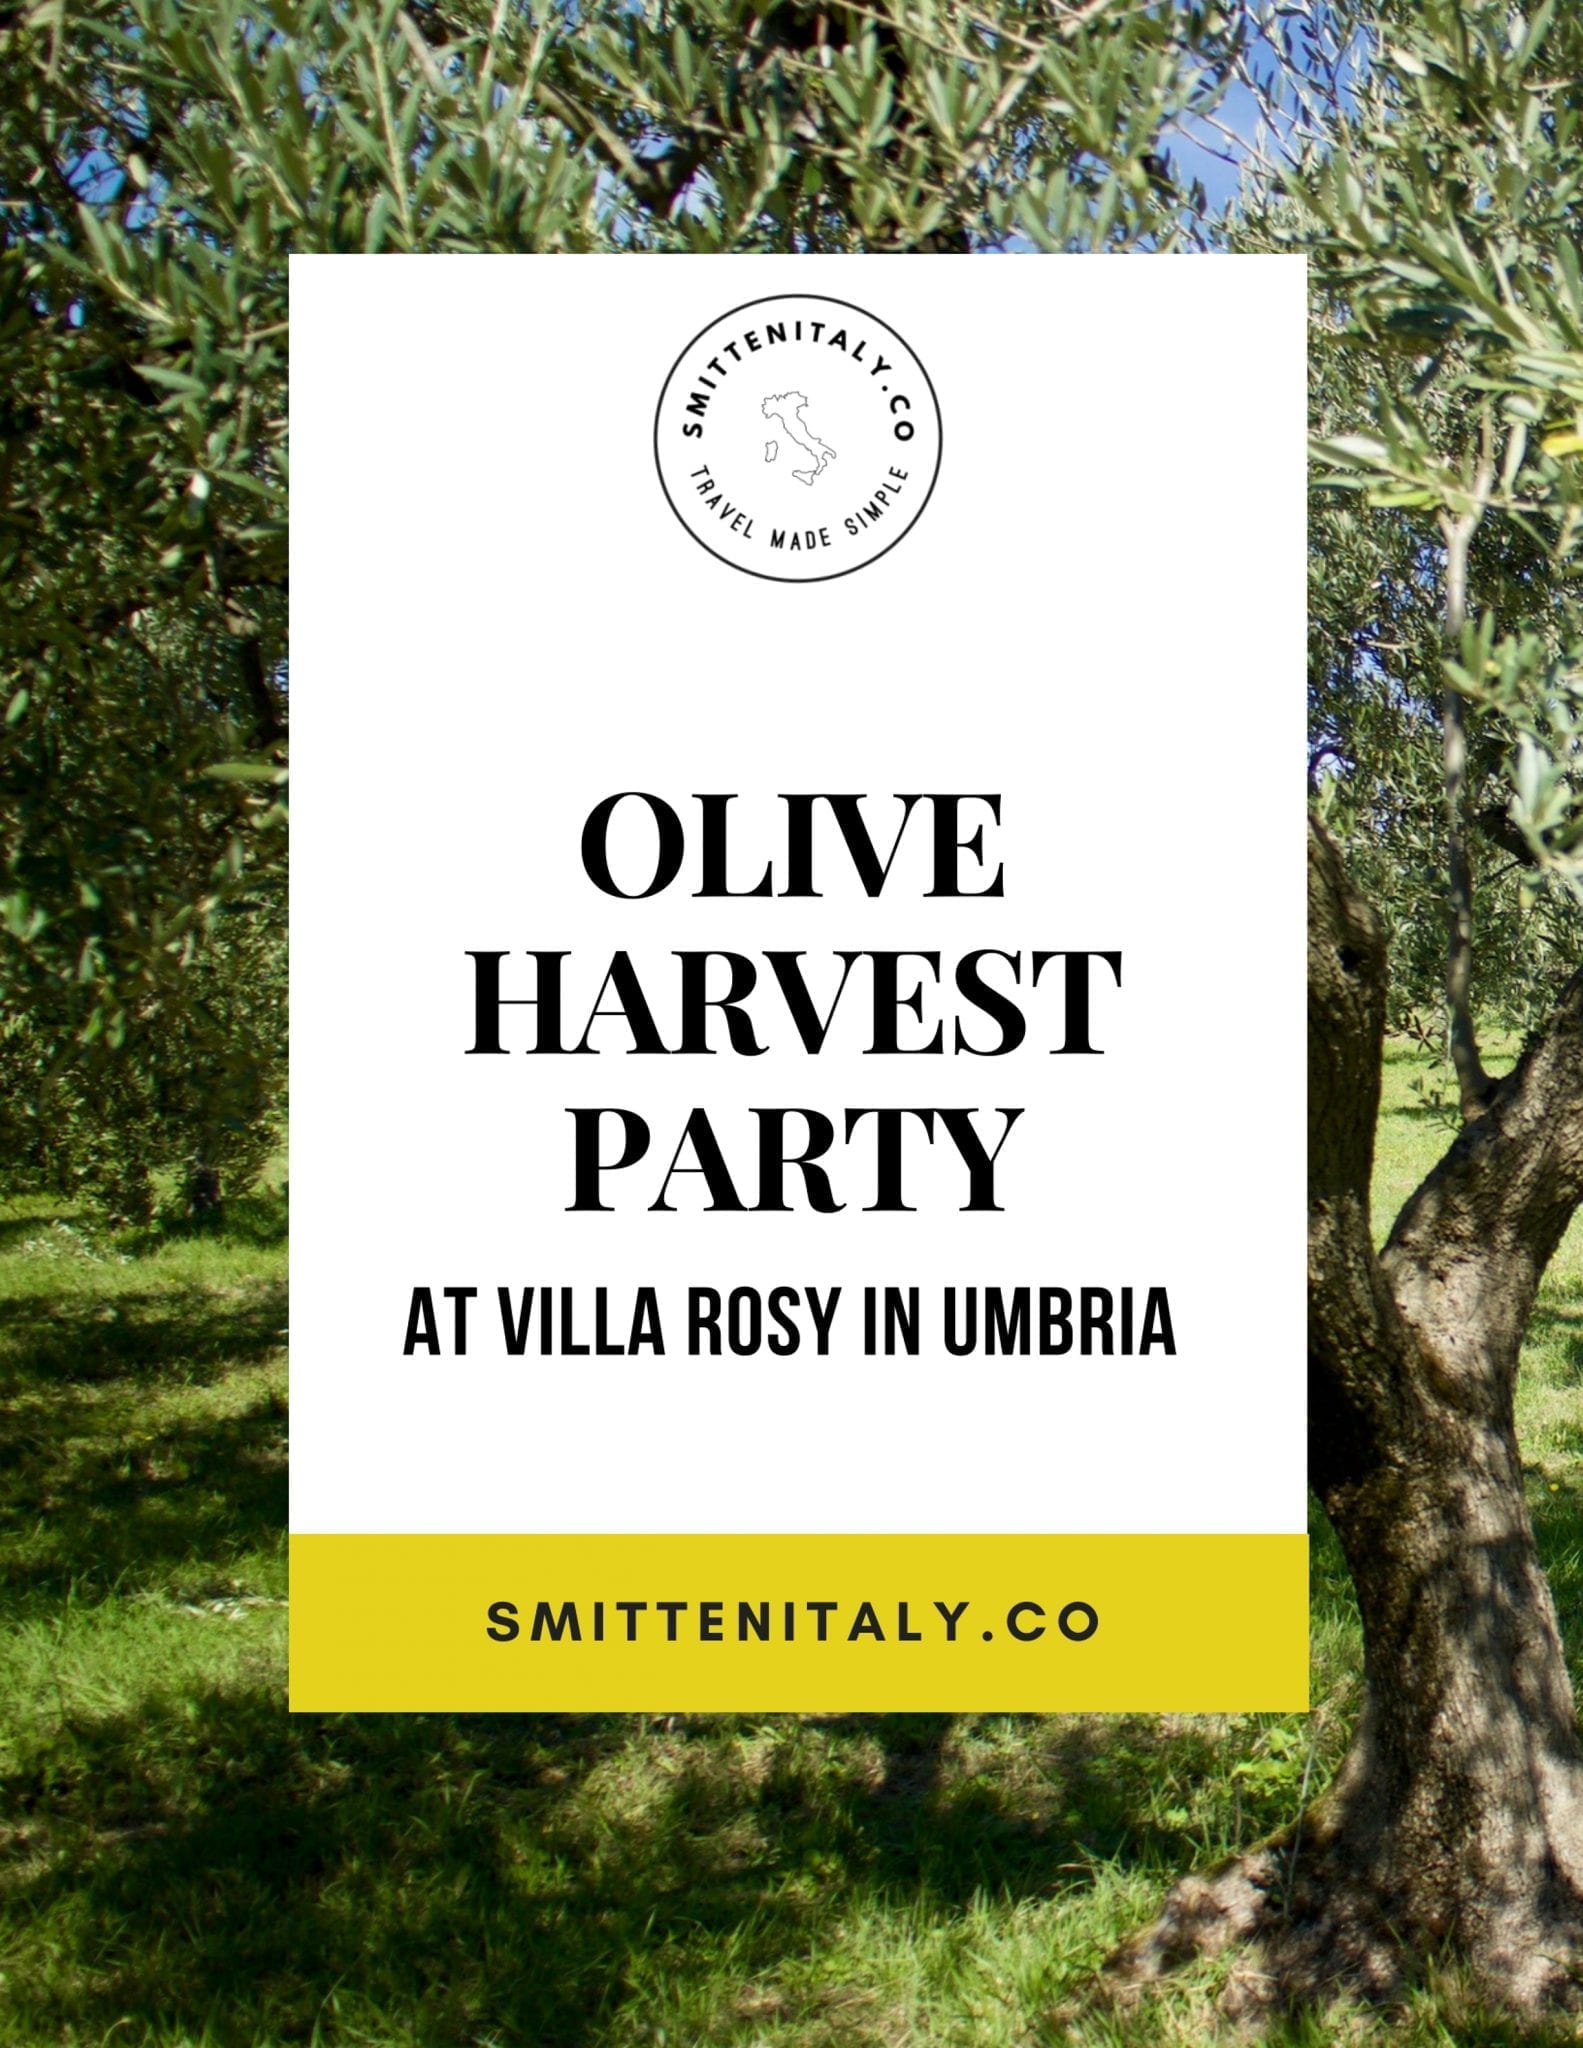 Umbrian olive harvest party,  2017